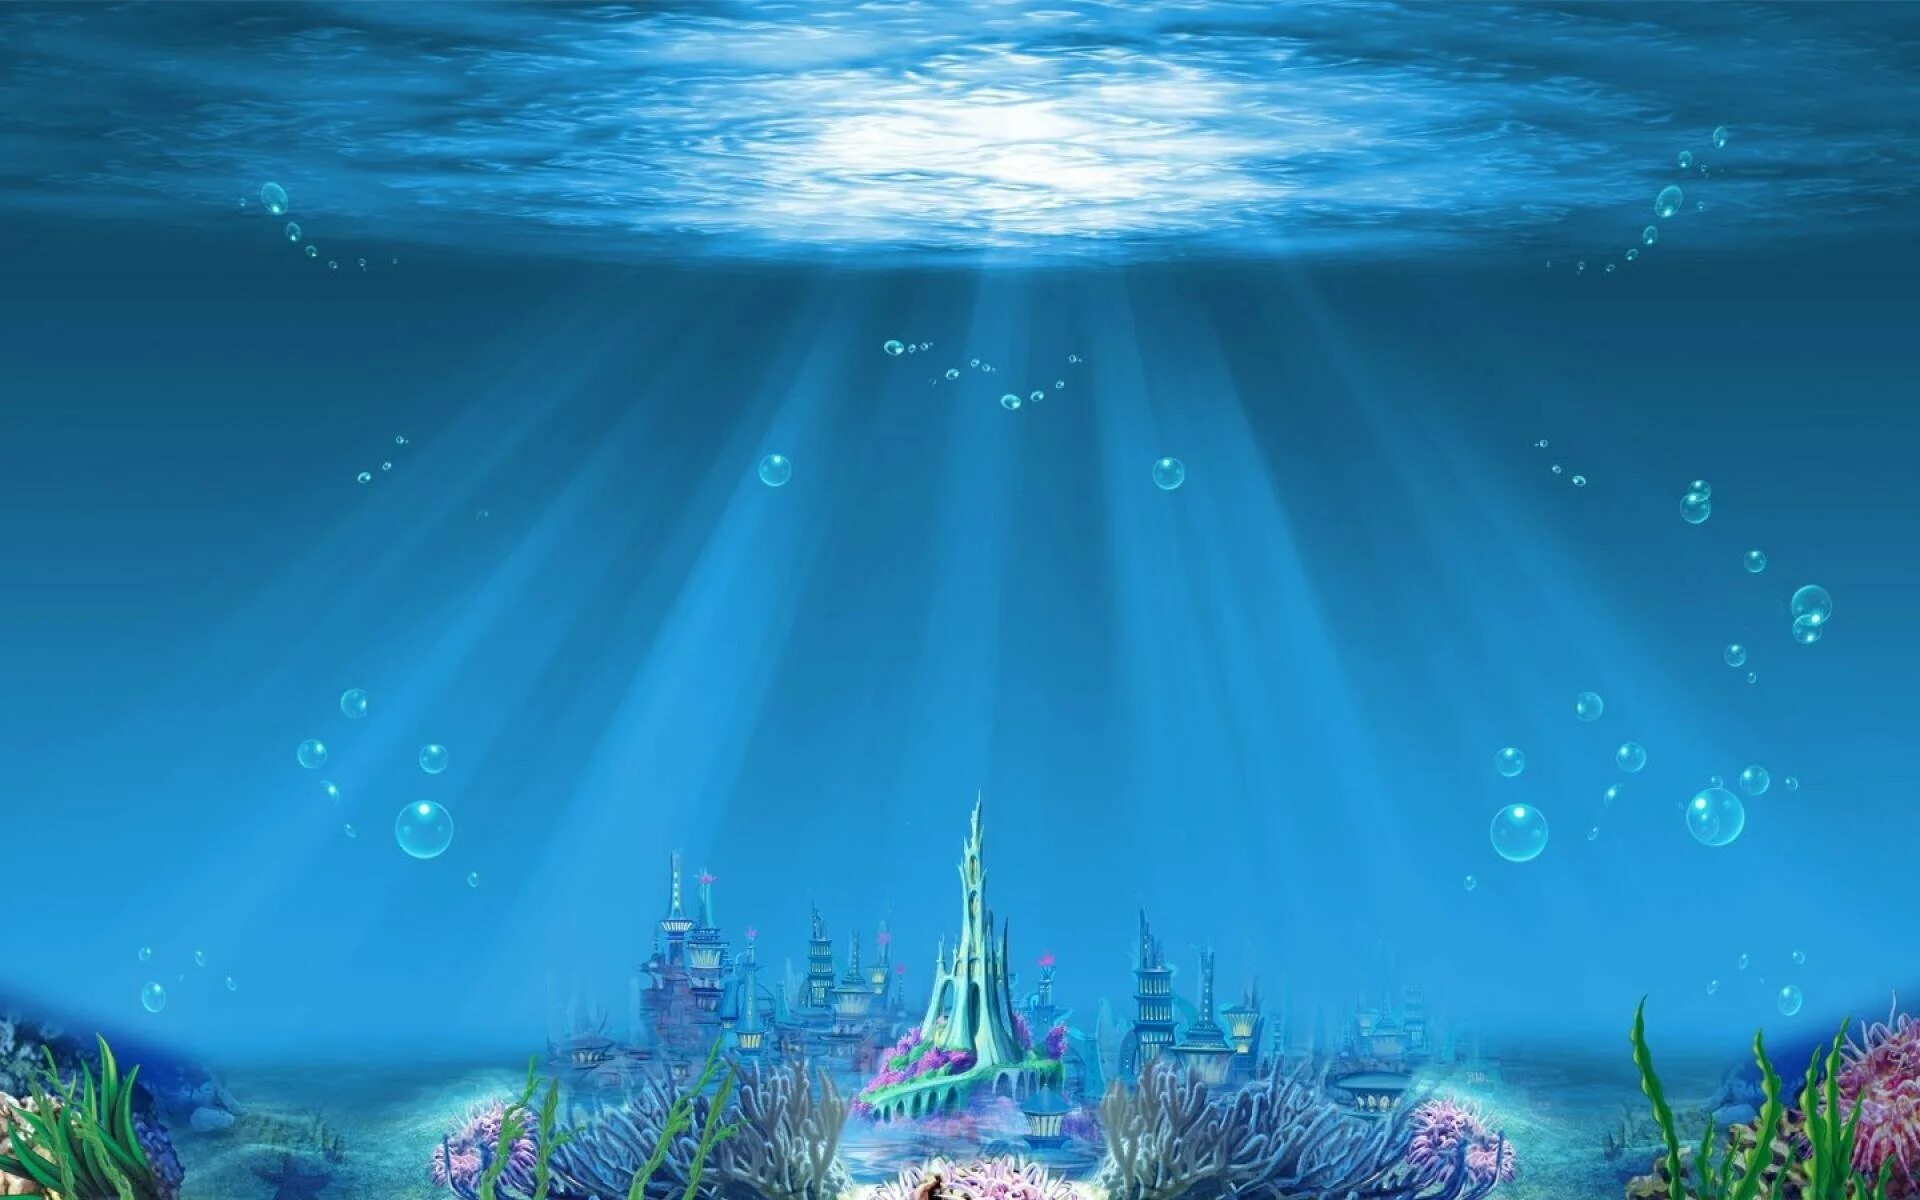 Дисней море. Подводное царство Ариэль. Подводное королевство Русалочки Ариэль. Подводный замок Русалочки Ариэль. Подводное царство Ариэль фон.